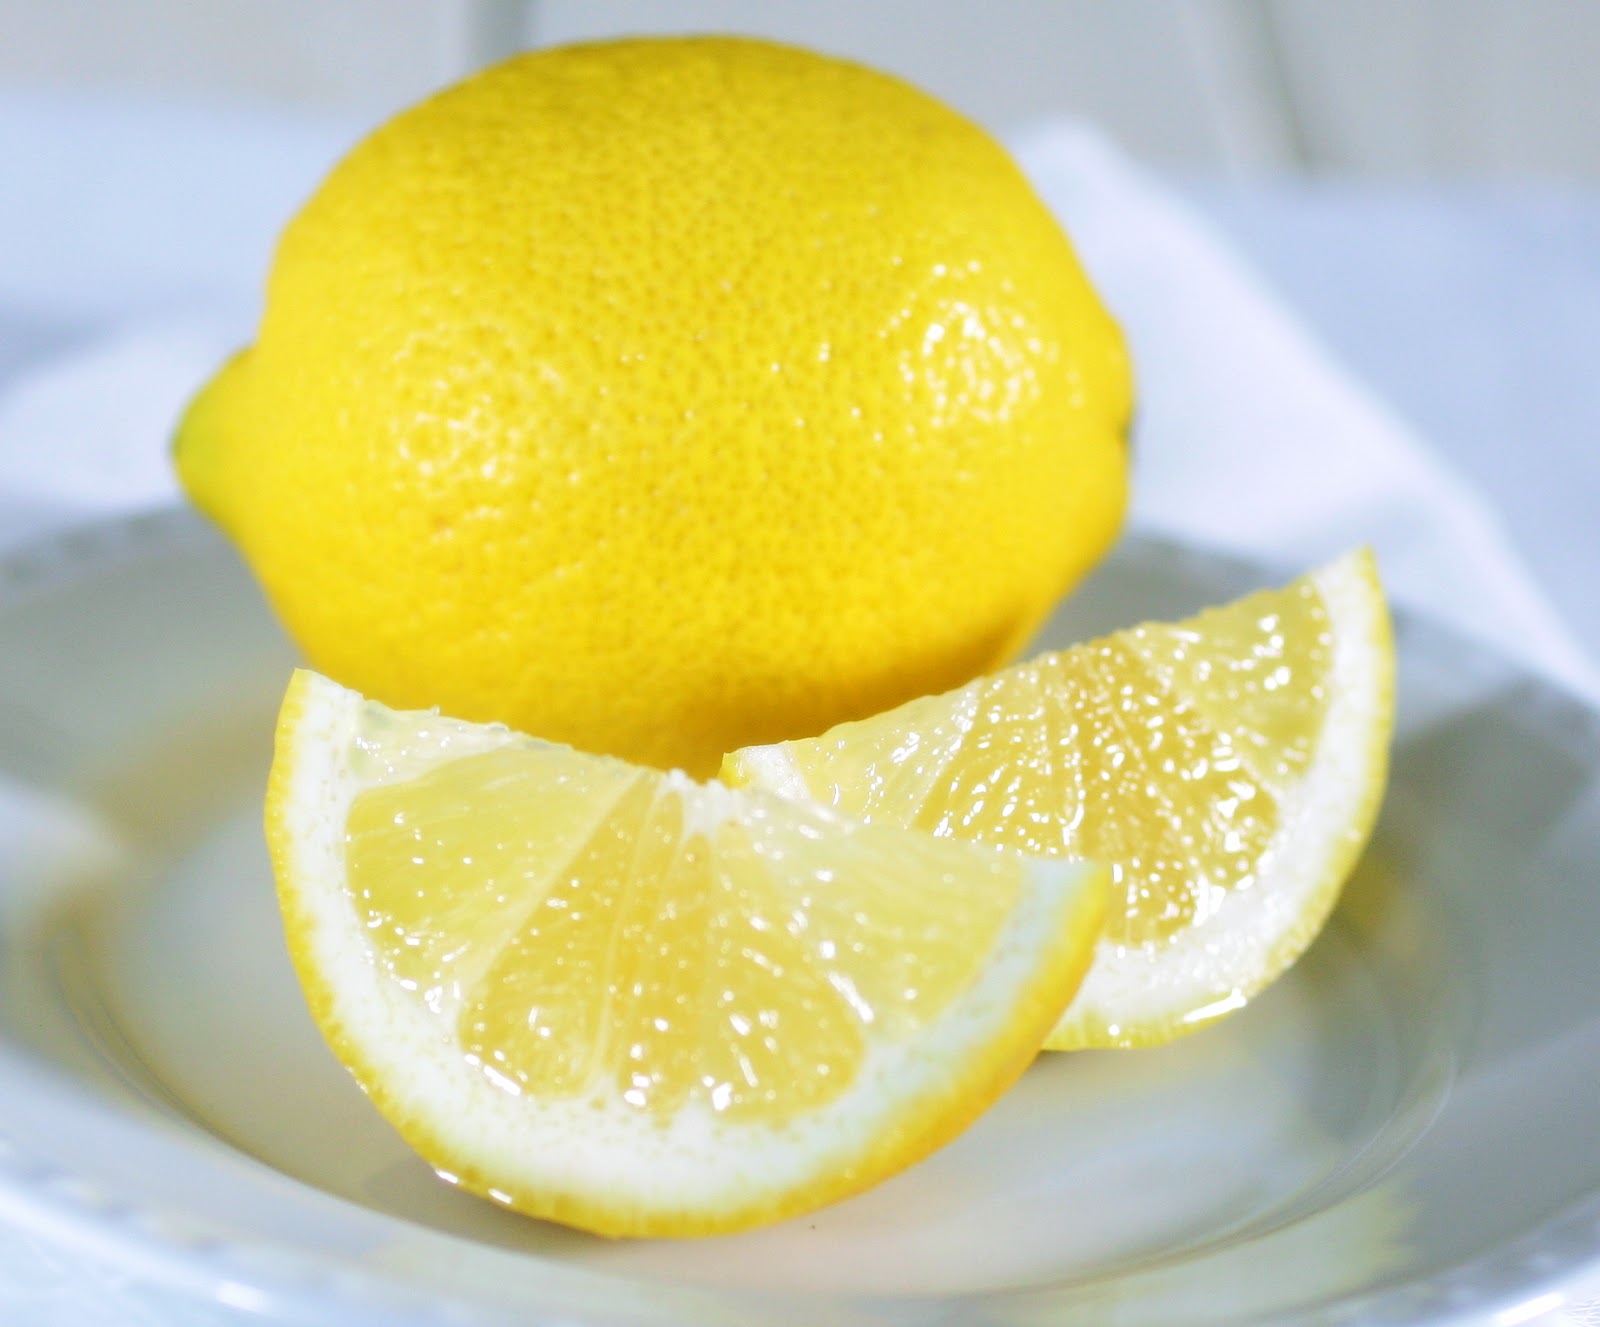 sweet lemon rationalization